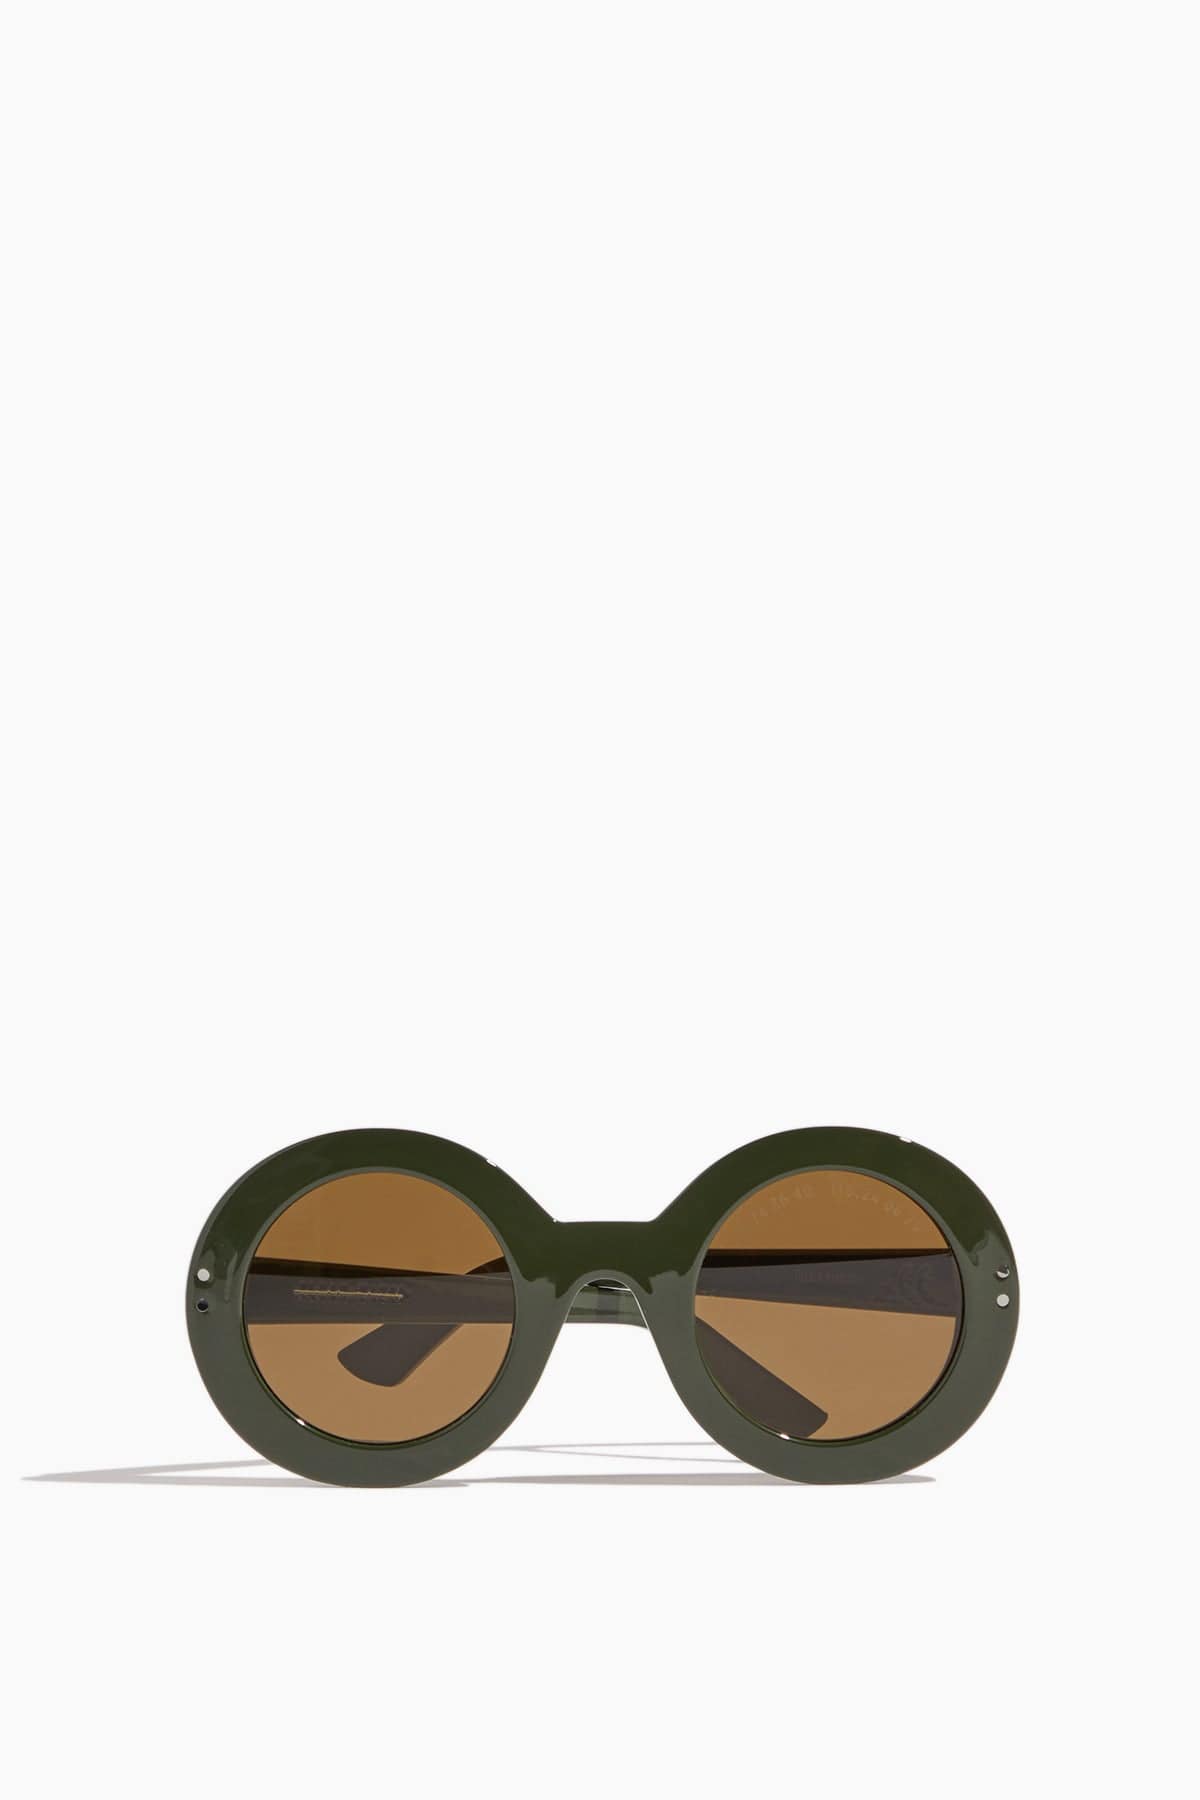 Clean Waves Sunglasses Inez and Vinoodh Round Sunglasses in Green